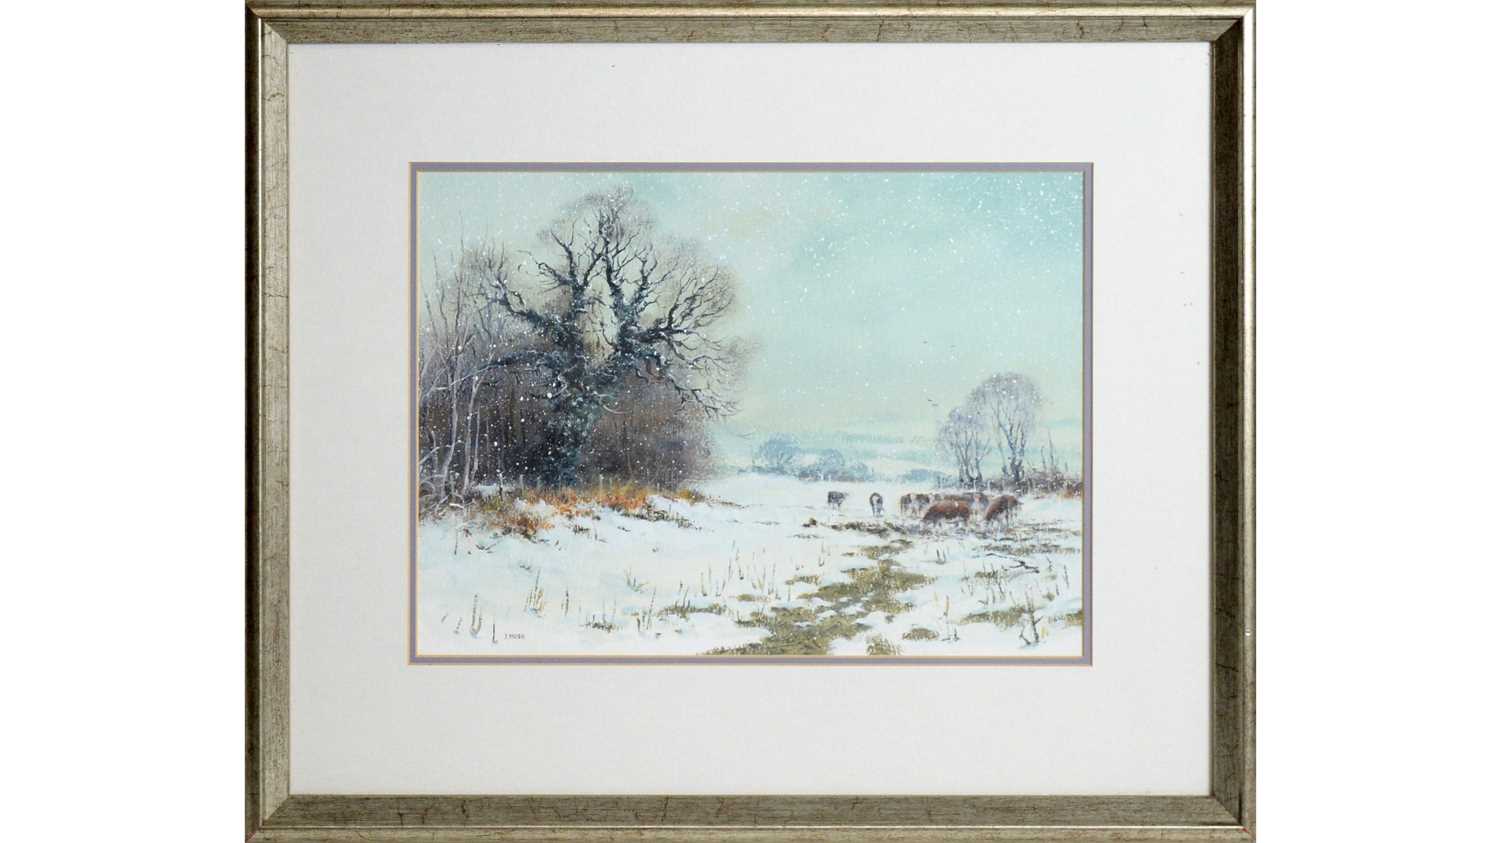 Lot 793 - Joe Hush - Soft Snowfall and Cattle | acrylic